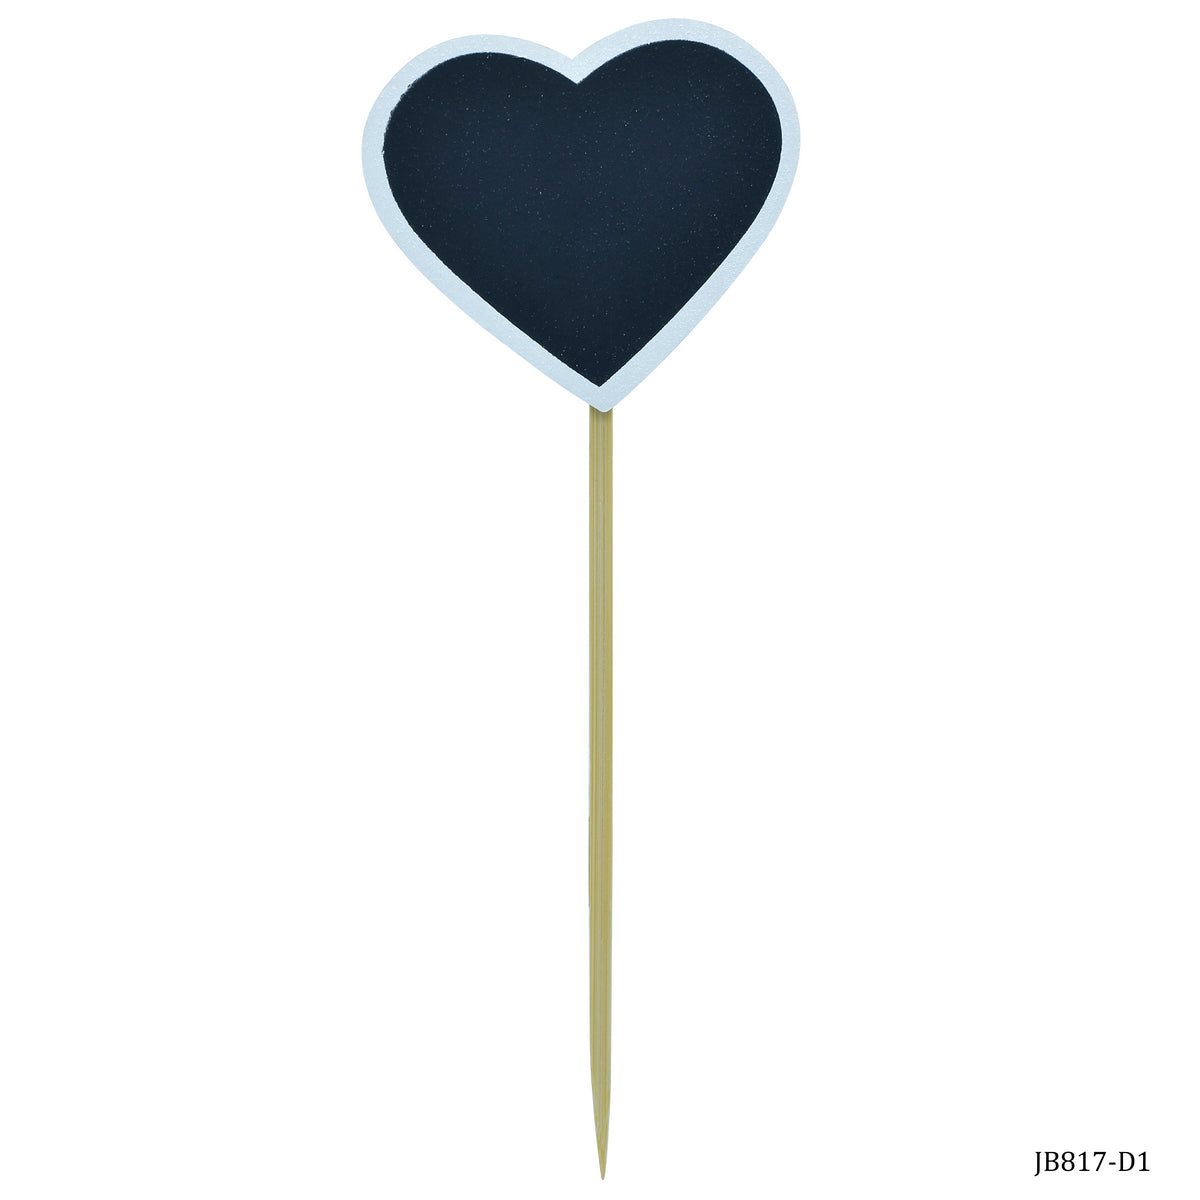 jags-mumbai Balloon & Party Products Mini Black Board Heart